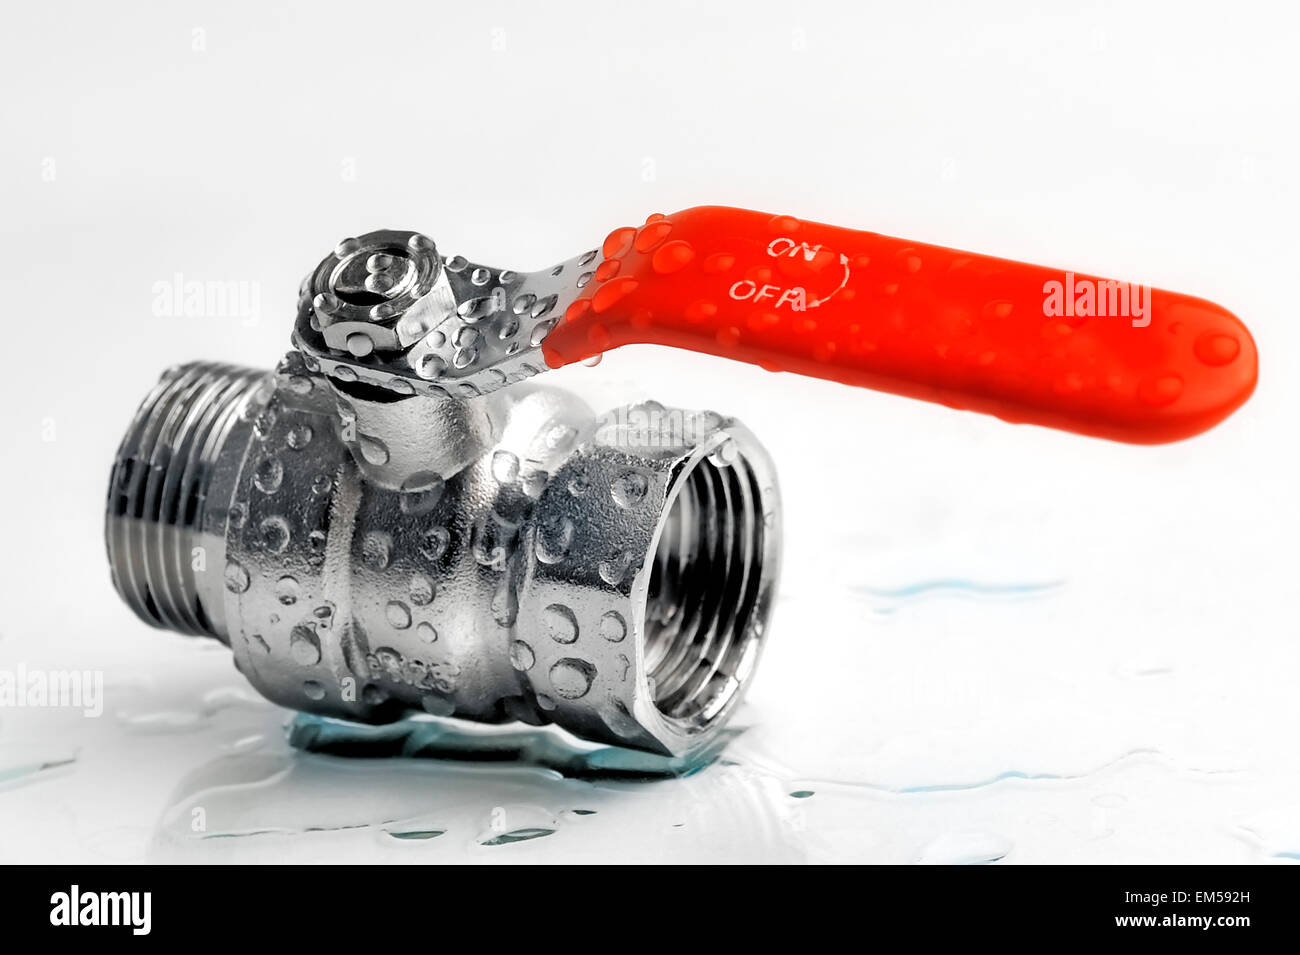 Plumbing valve on a white background Stock Photo